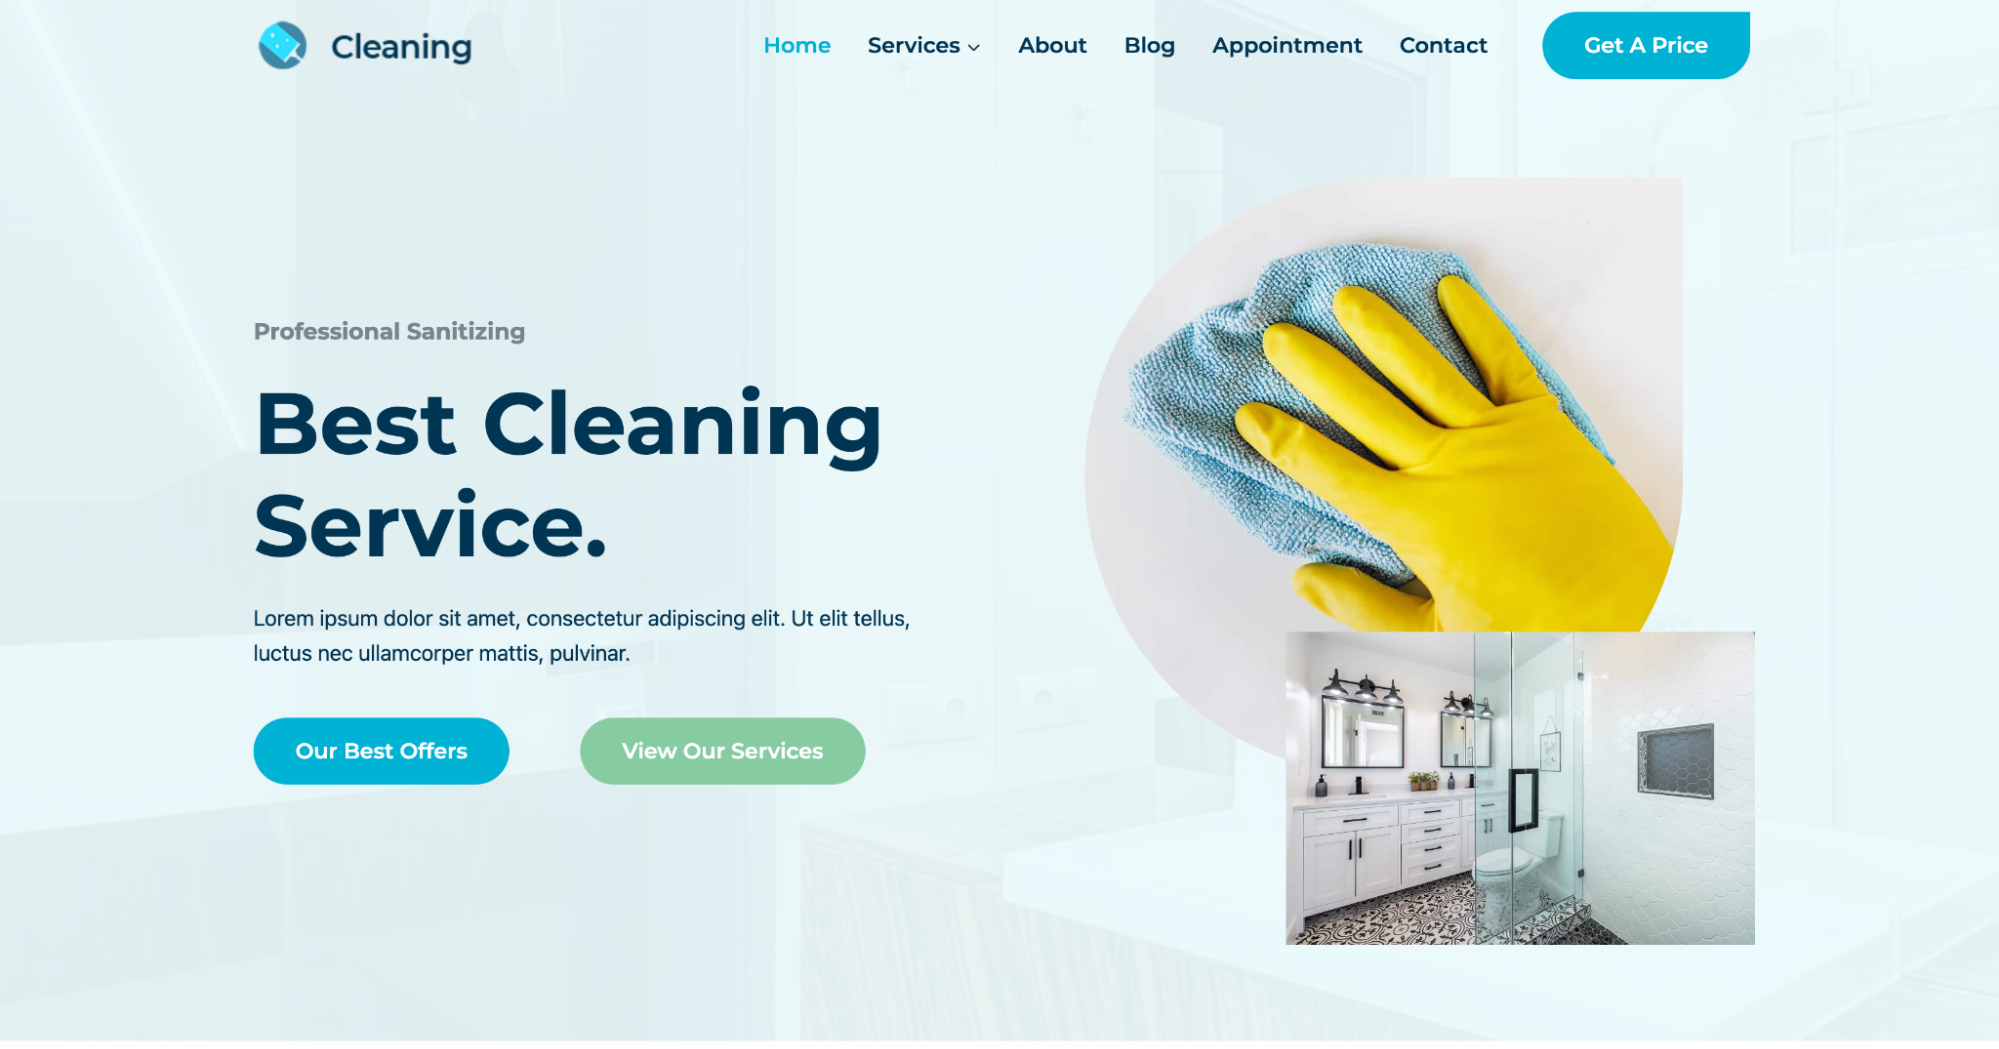 Cleaning Service WordPress Theme